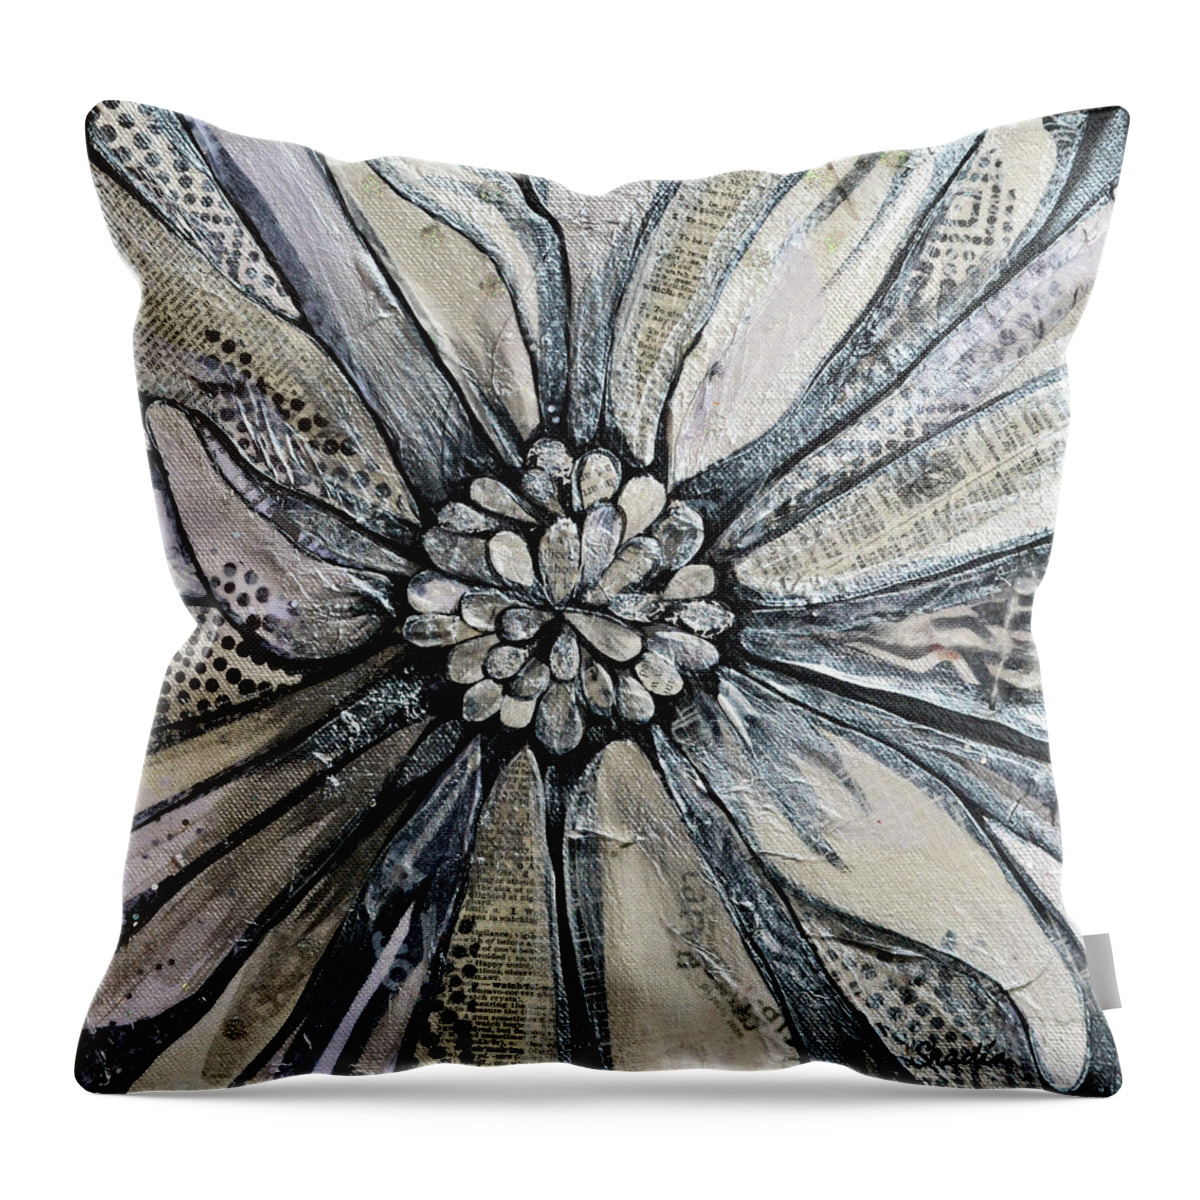 Chrysanthemum Throw Pillow featuring the painting Chrysanthemum by Shadia Derbyshire